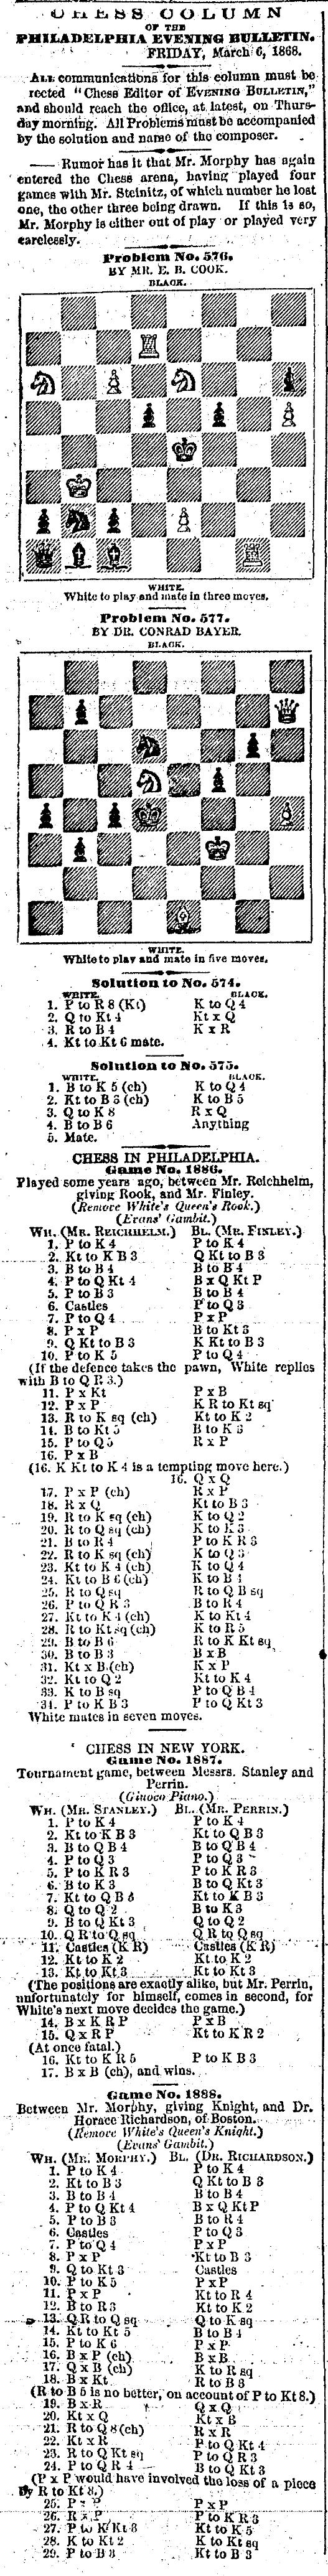 1868.03.06-01 Philadelphia Daily Evening Bulletin.jpg